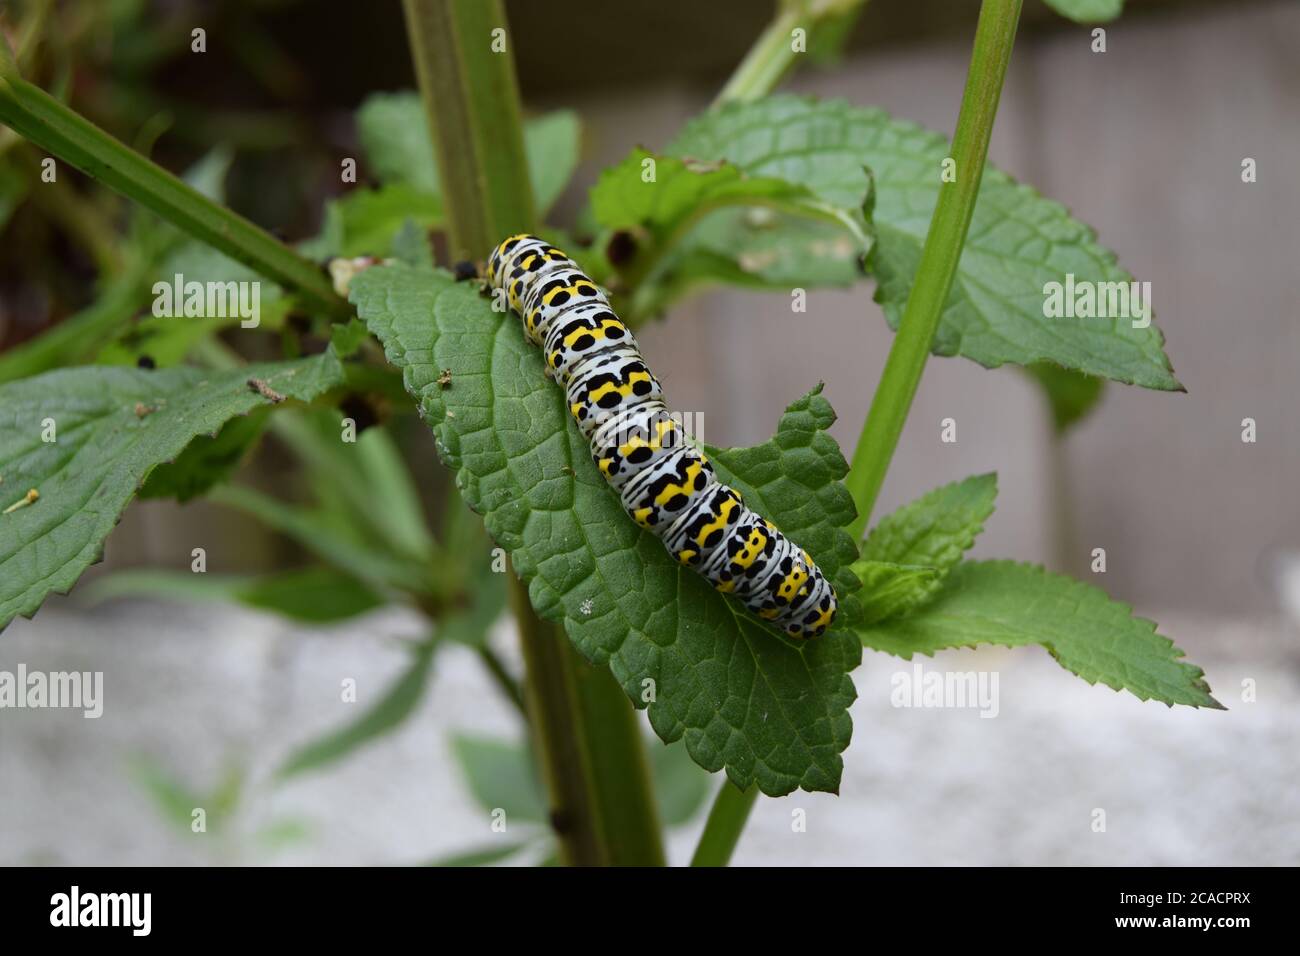 The Mullein caterpillar on leaf Stock Photo